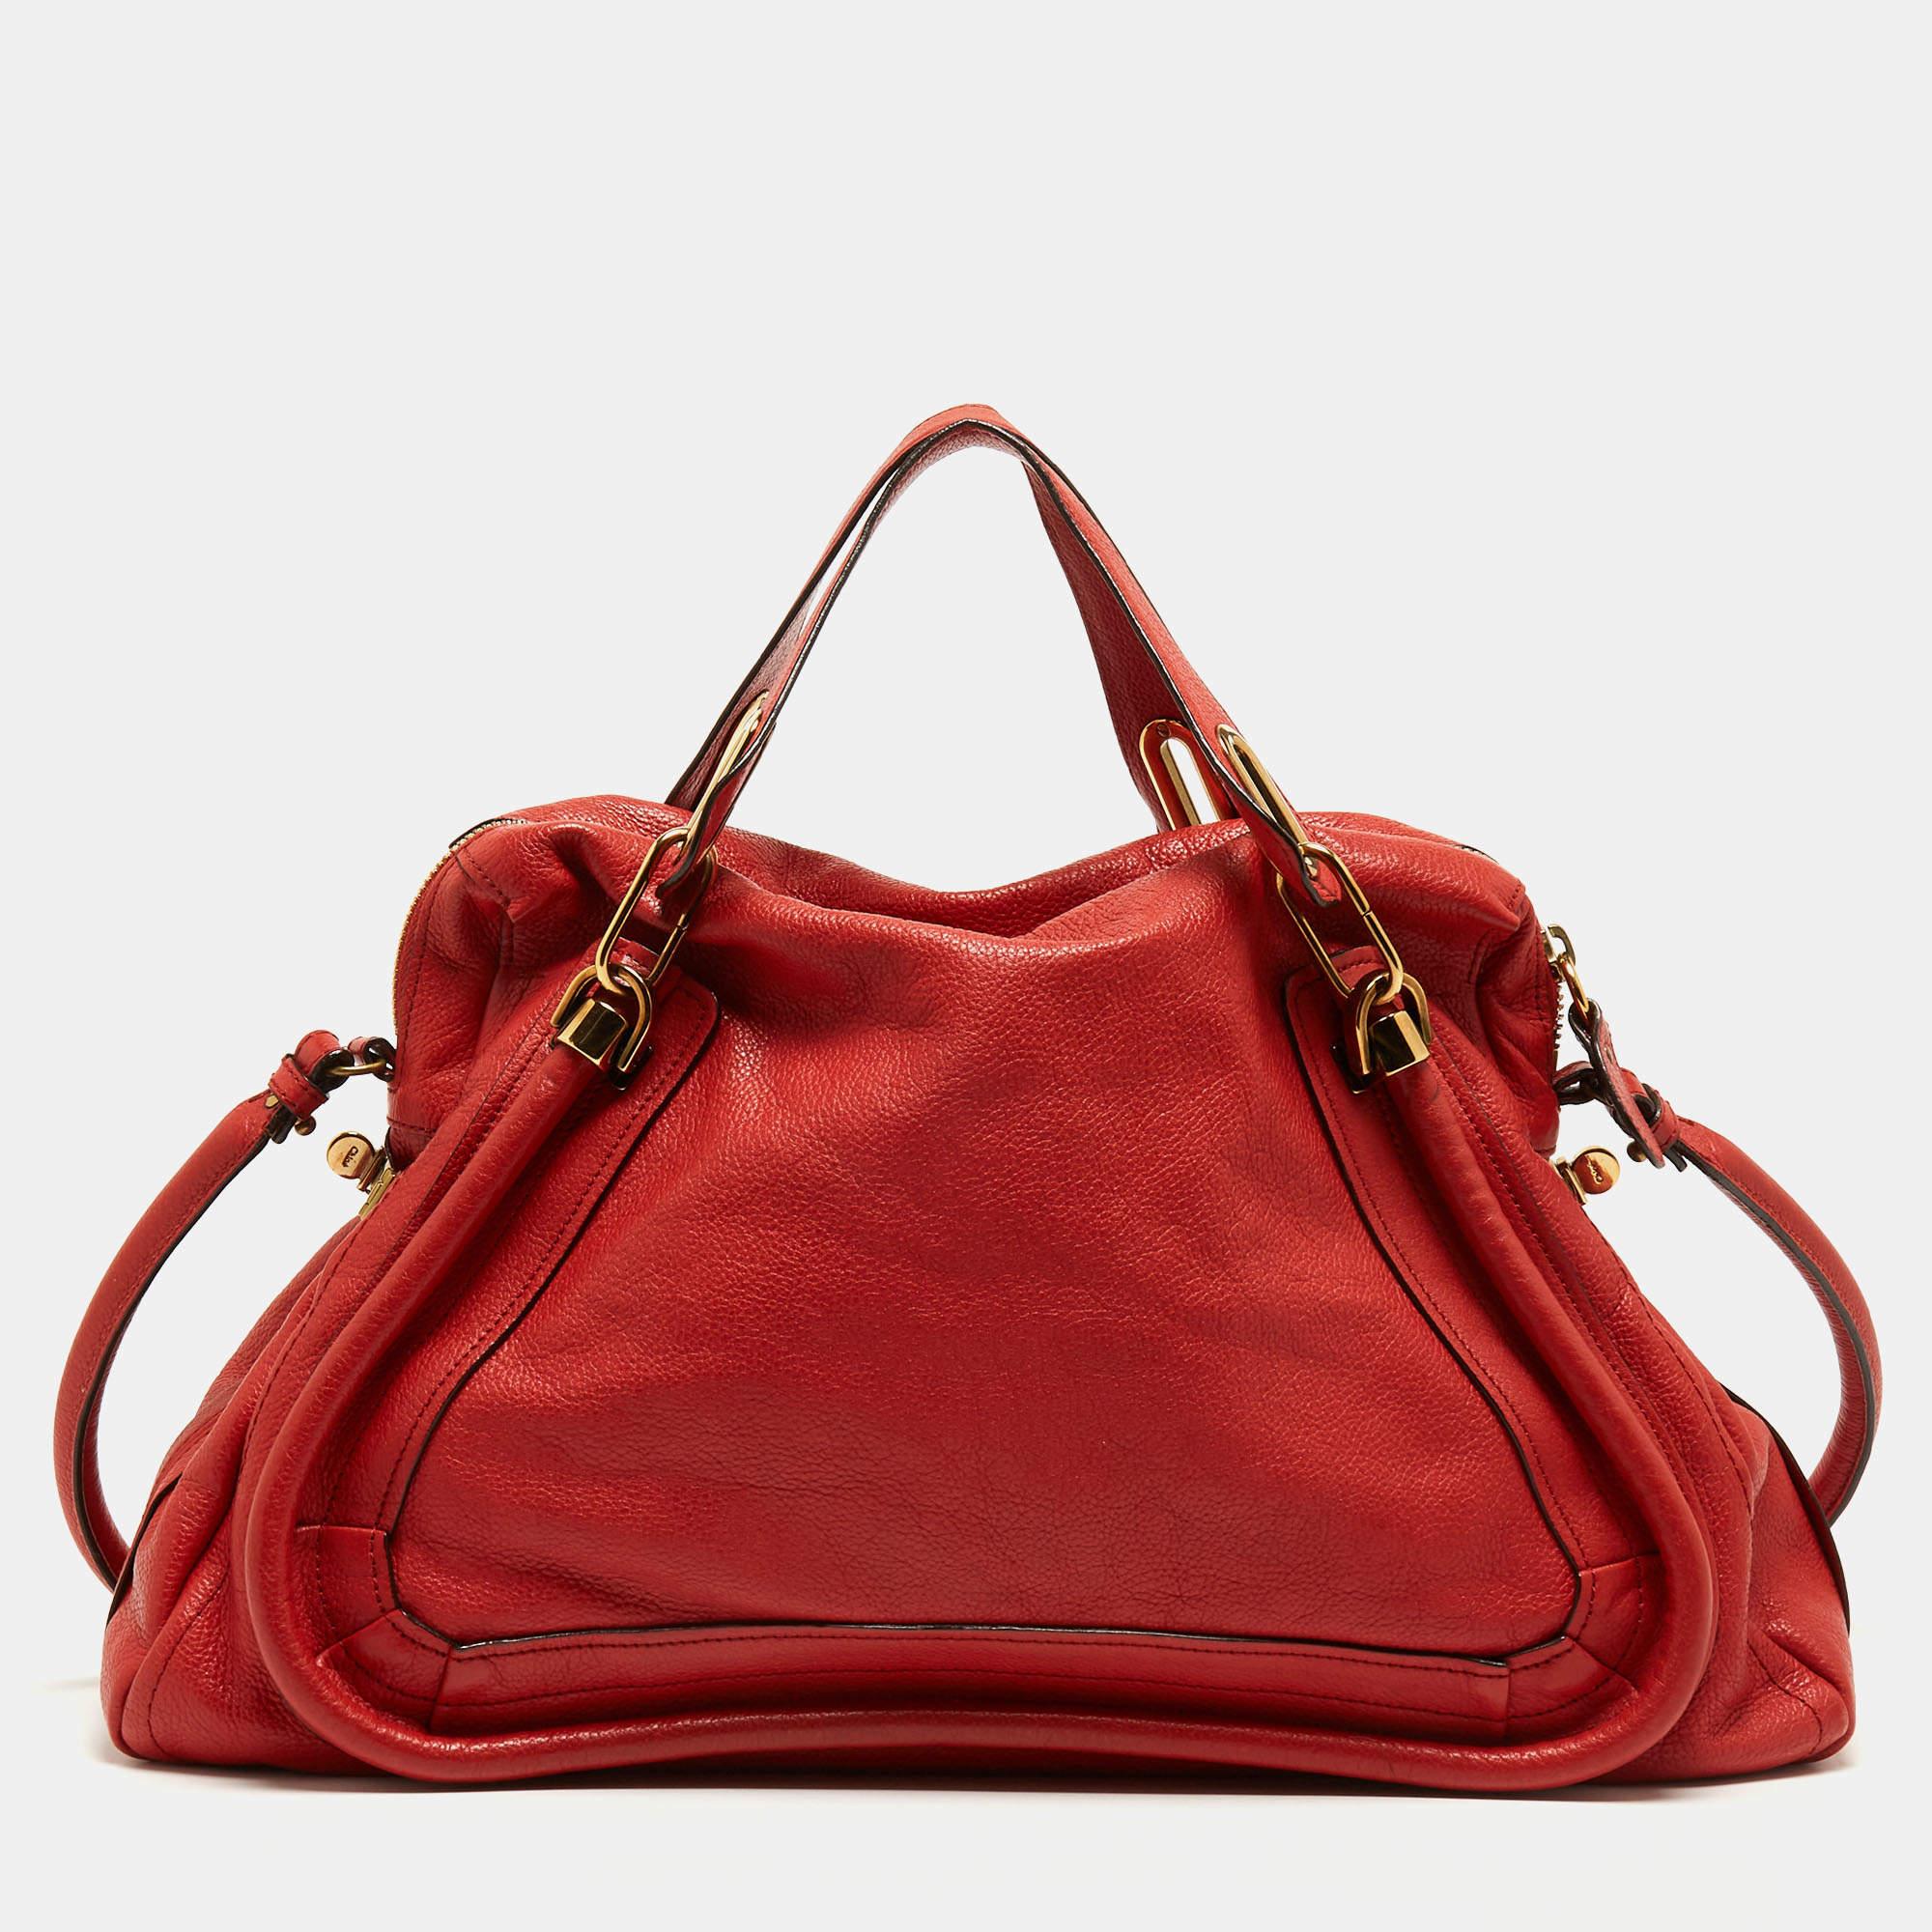 Chloe Brick Red Leather Large Paraty Shoulder Bag In Good Condition For Sale In Dubai, Al Qouz 2